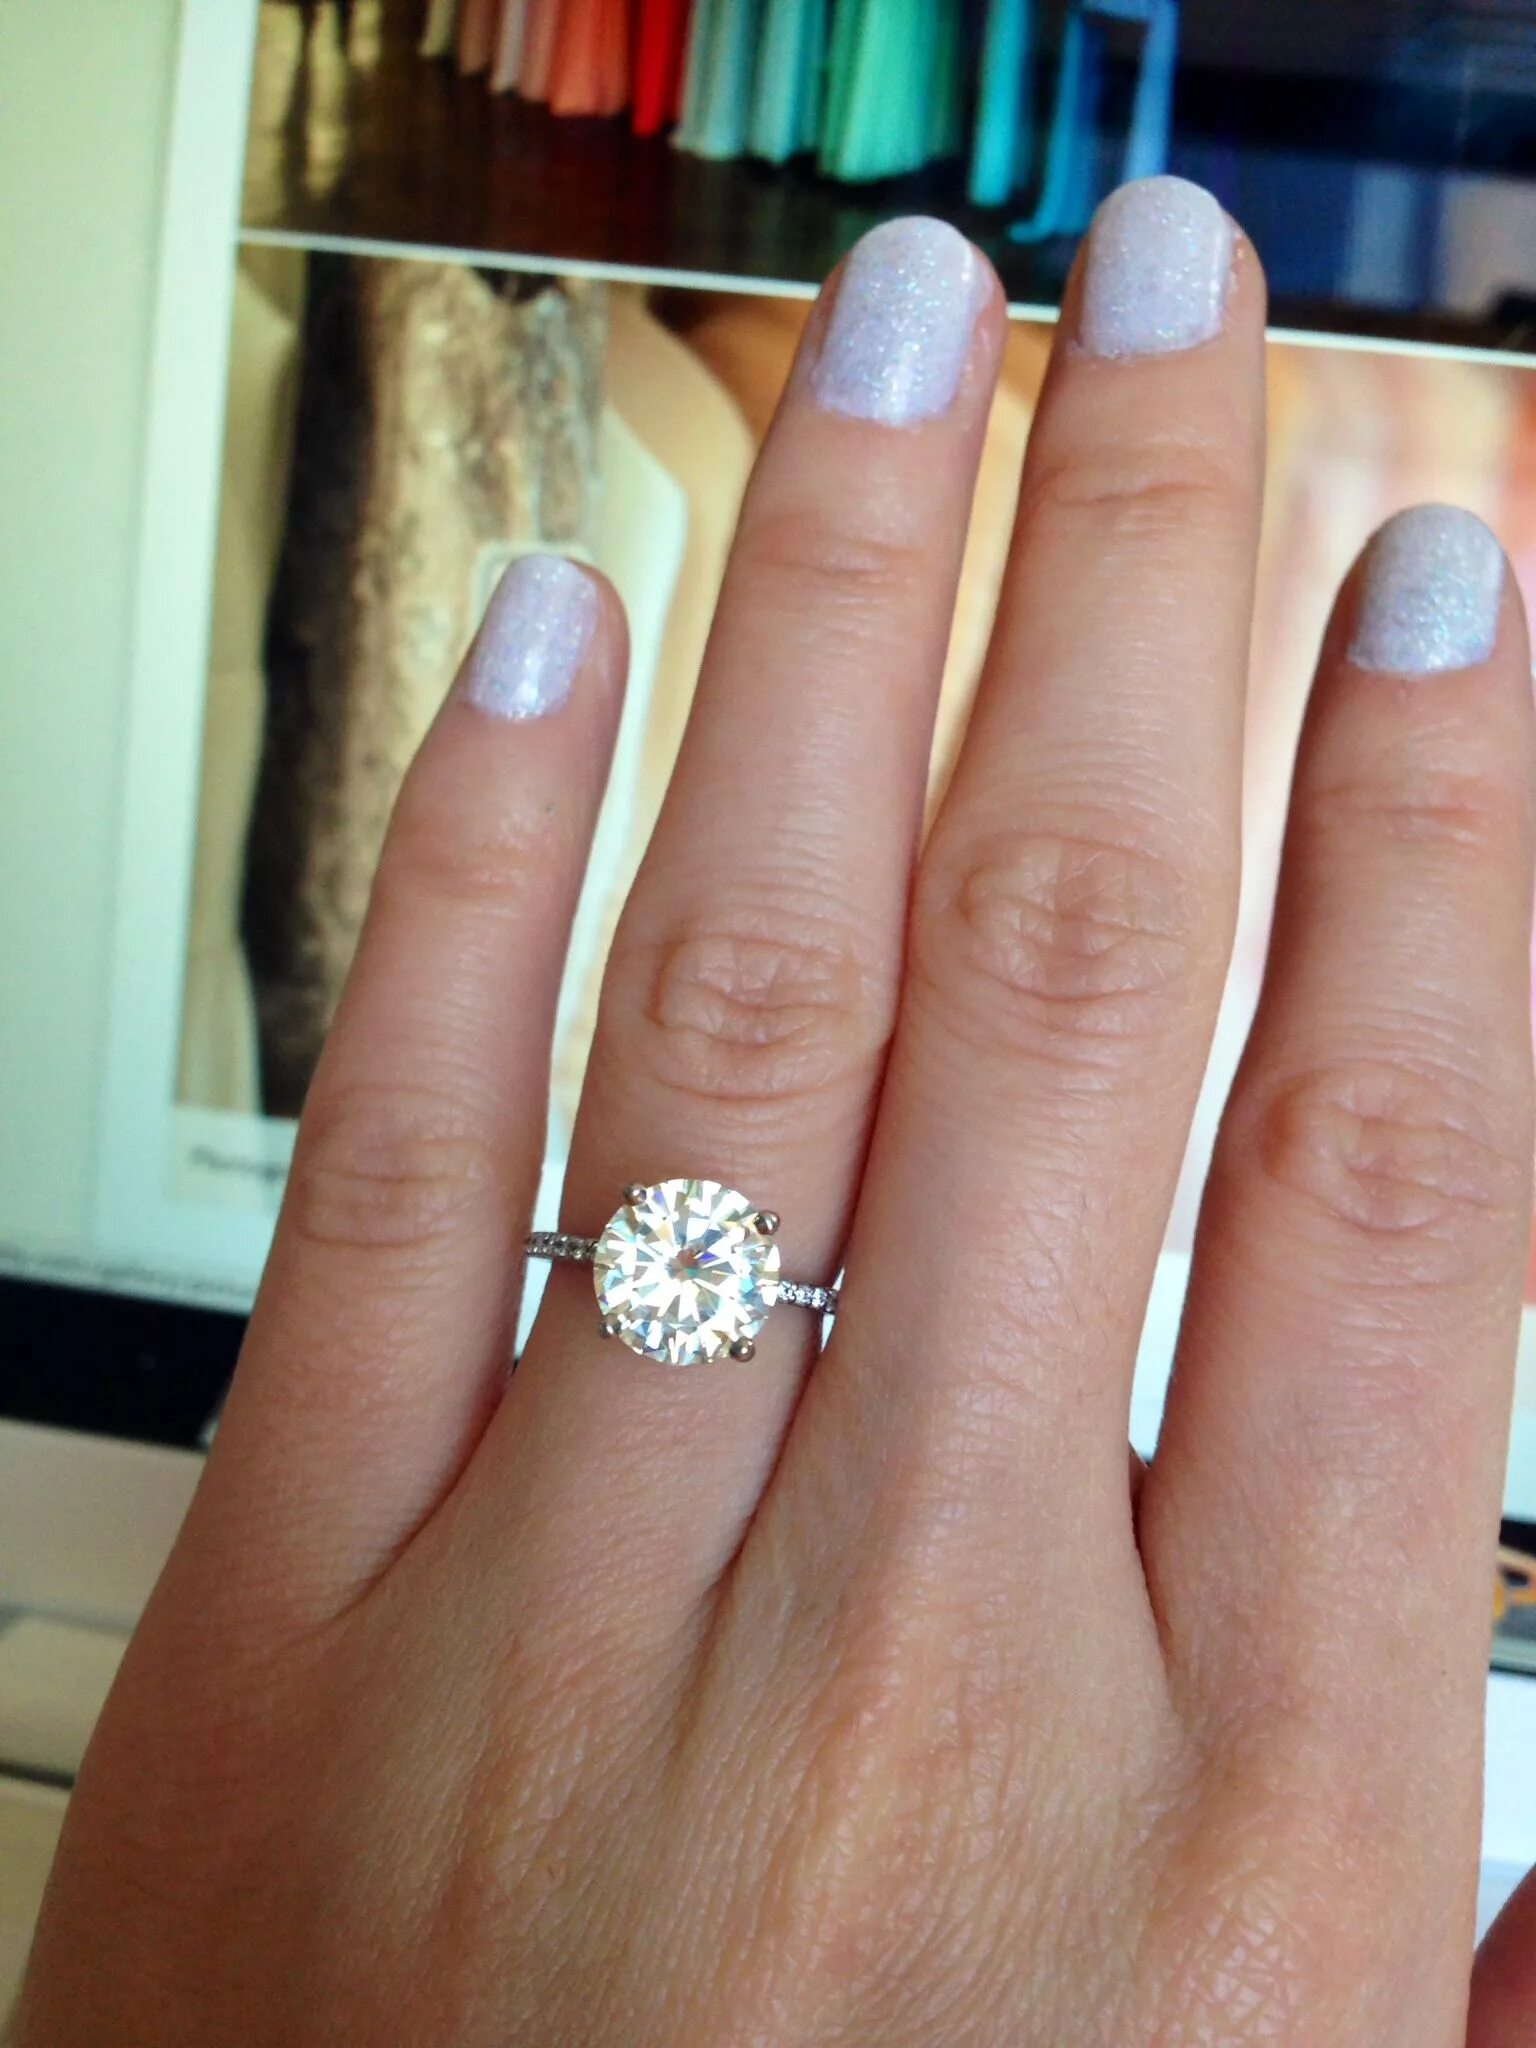 Два карата. Кольцо 5 карат. Обручальное кольцо кольцо 5 карат. Radiant Solitaire 5 Carat Diamond Ring. 2 5 Carat Diamond Ring.